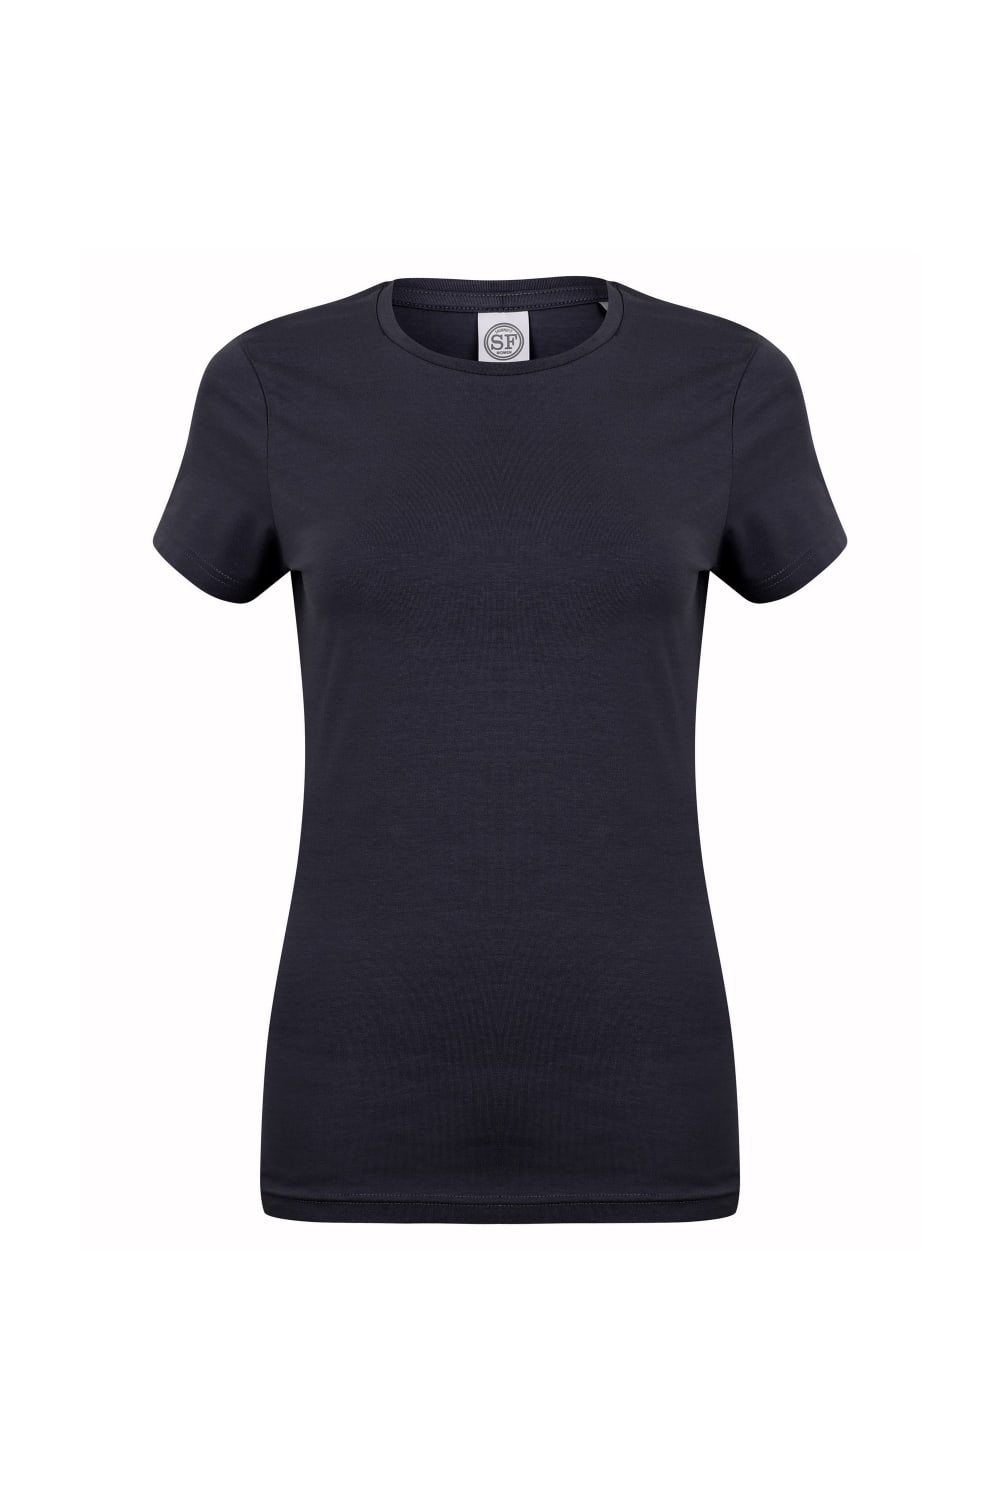 Skinni Fit Womens/Ladies Feel Good Stretch Short Sleeve T-Shirt (Navy)